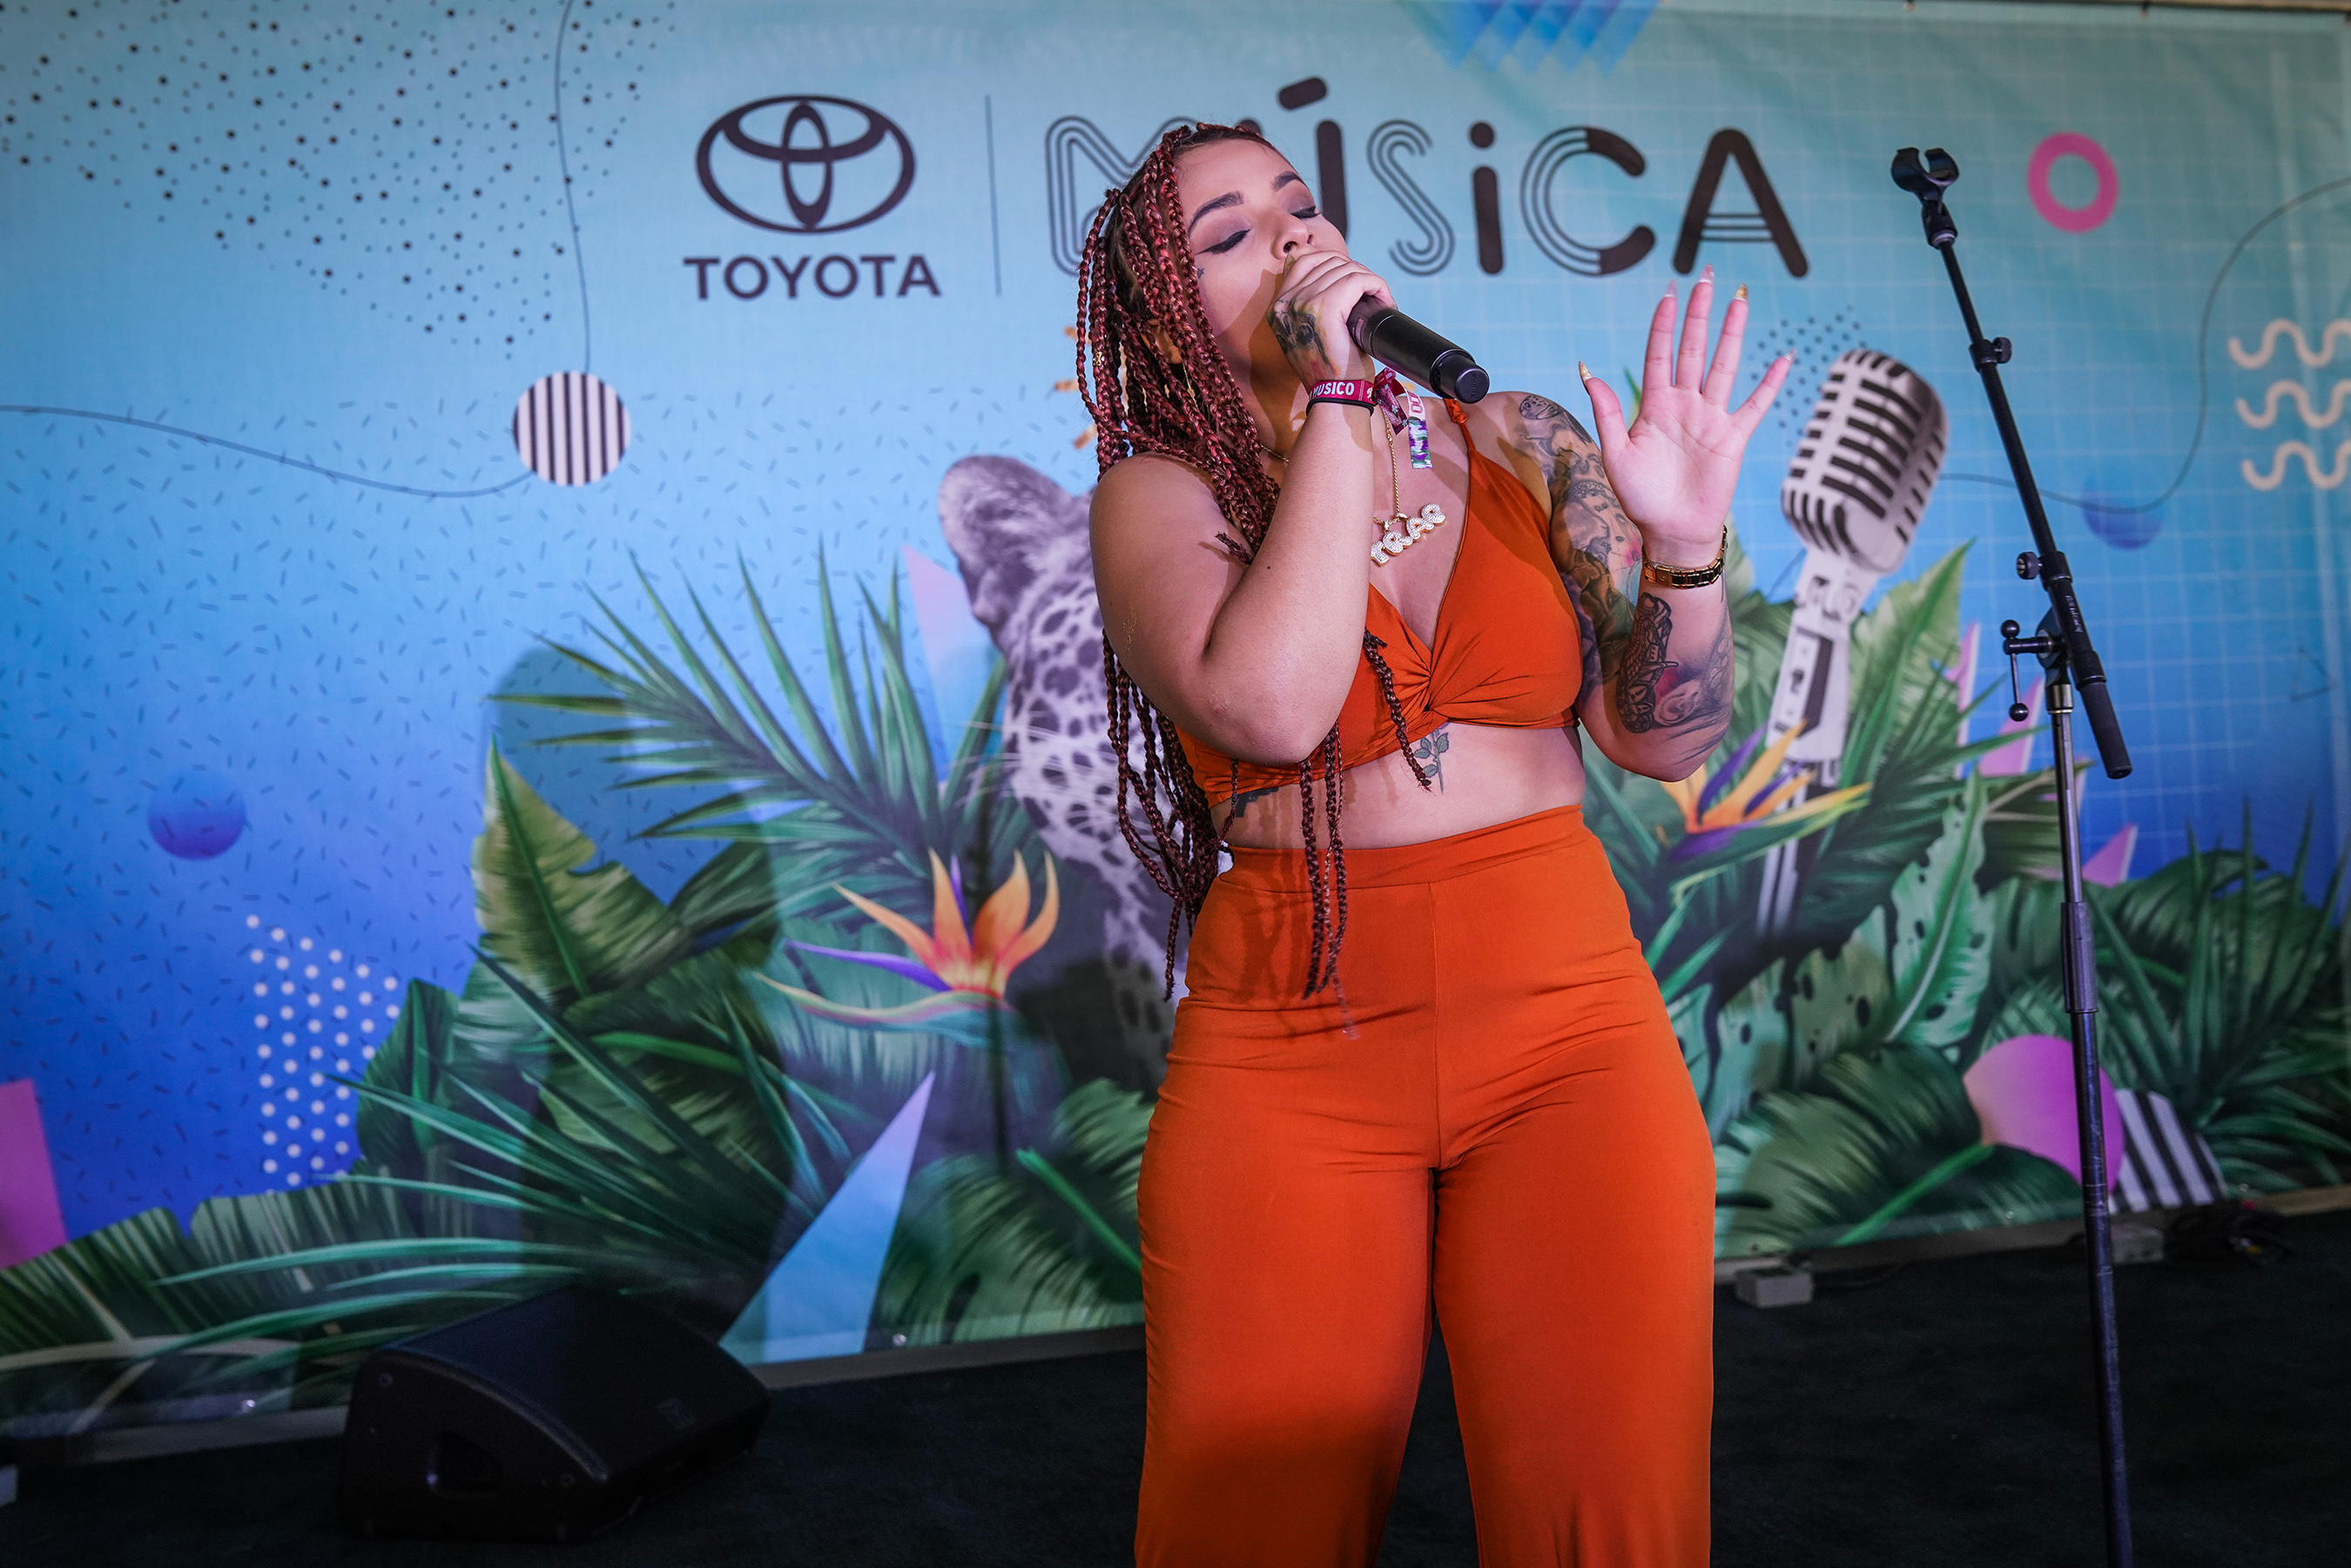 Puerto Rican latin trap singer, Joha â€œLa Primera Damaâ€ performed on the Toyota Music Den stage during day 3 of Ruido Fest 2018 in Chicago.